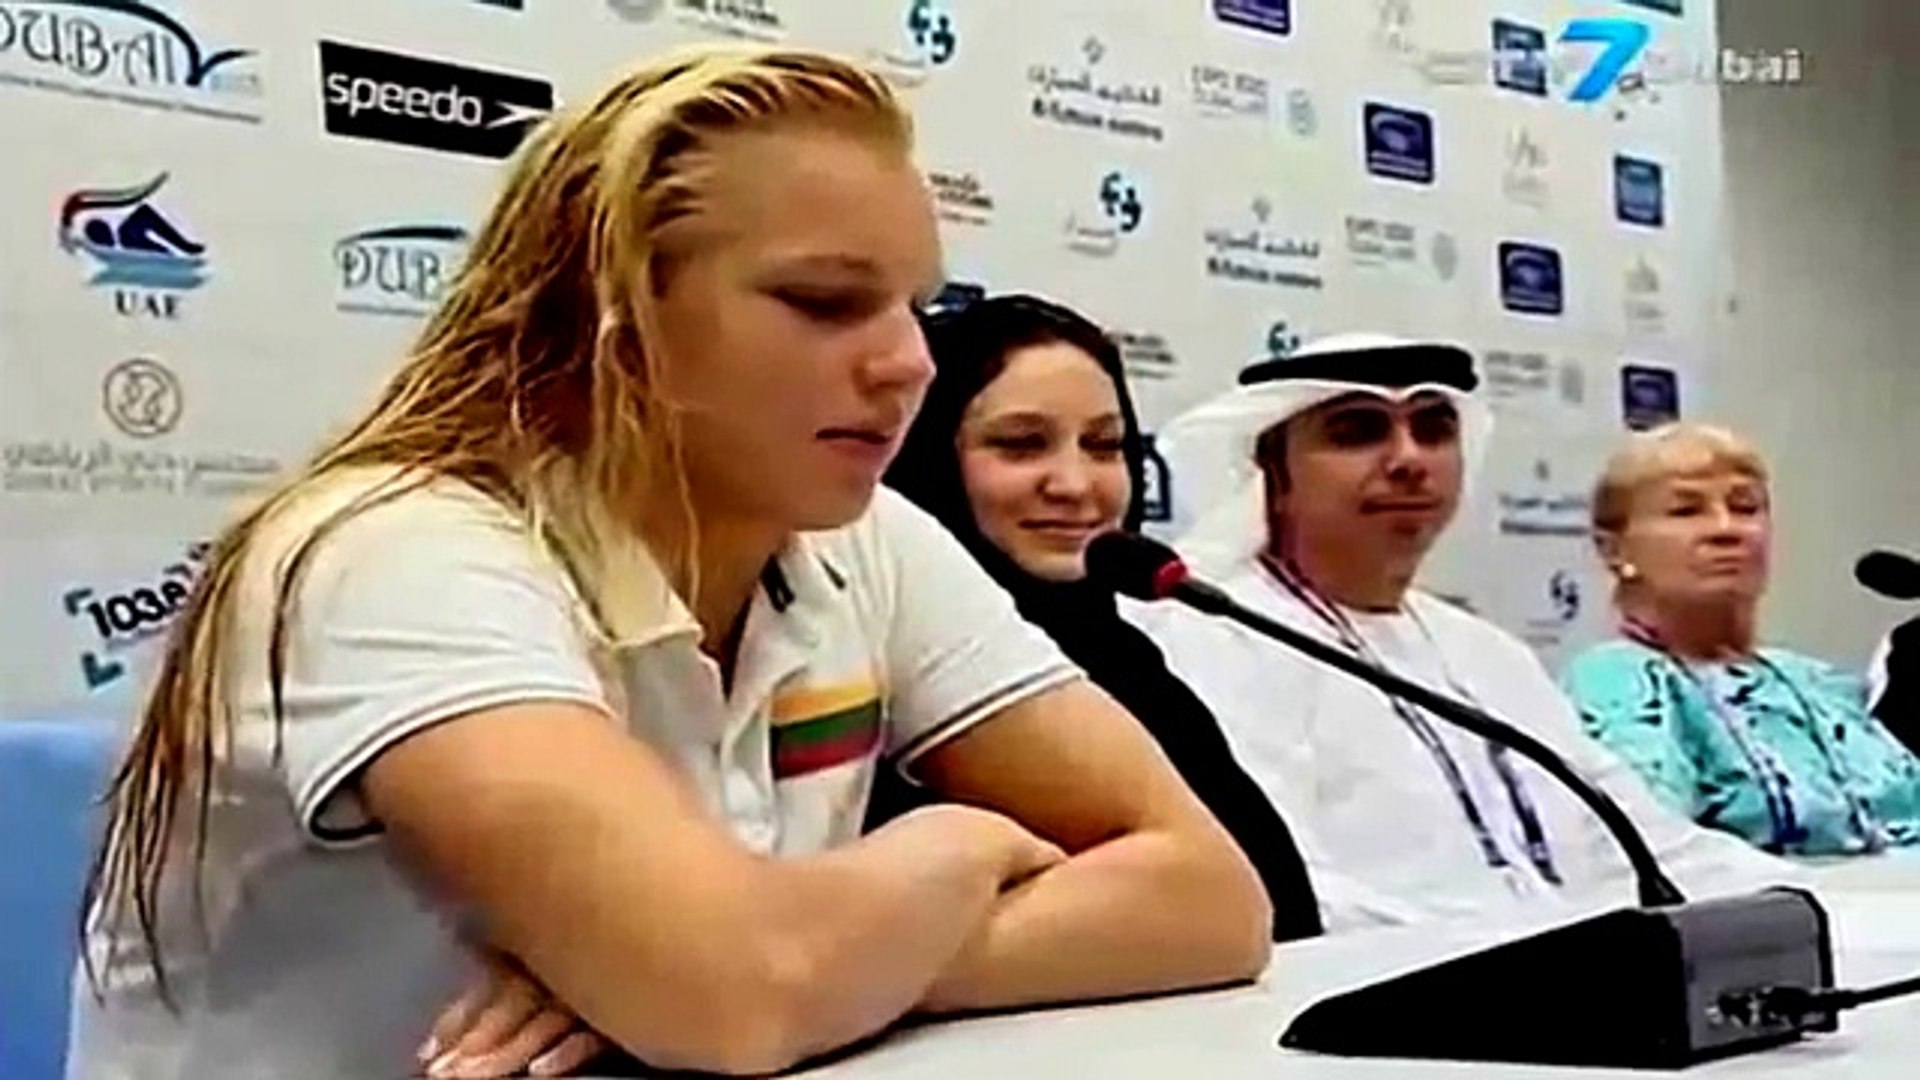 Rūta Meilutytė - Interview City 7 Dubai TV - 2013.08.25